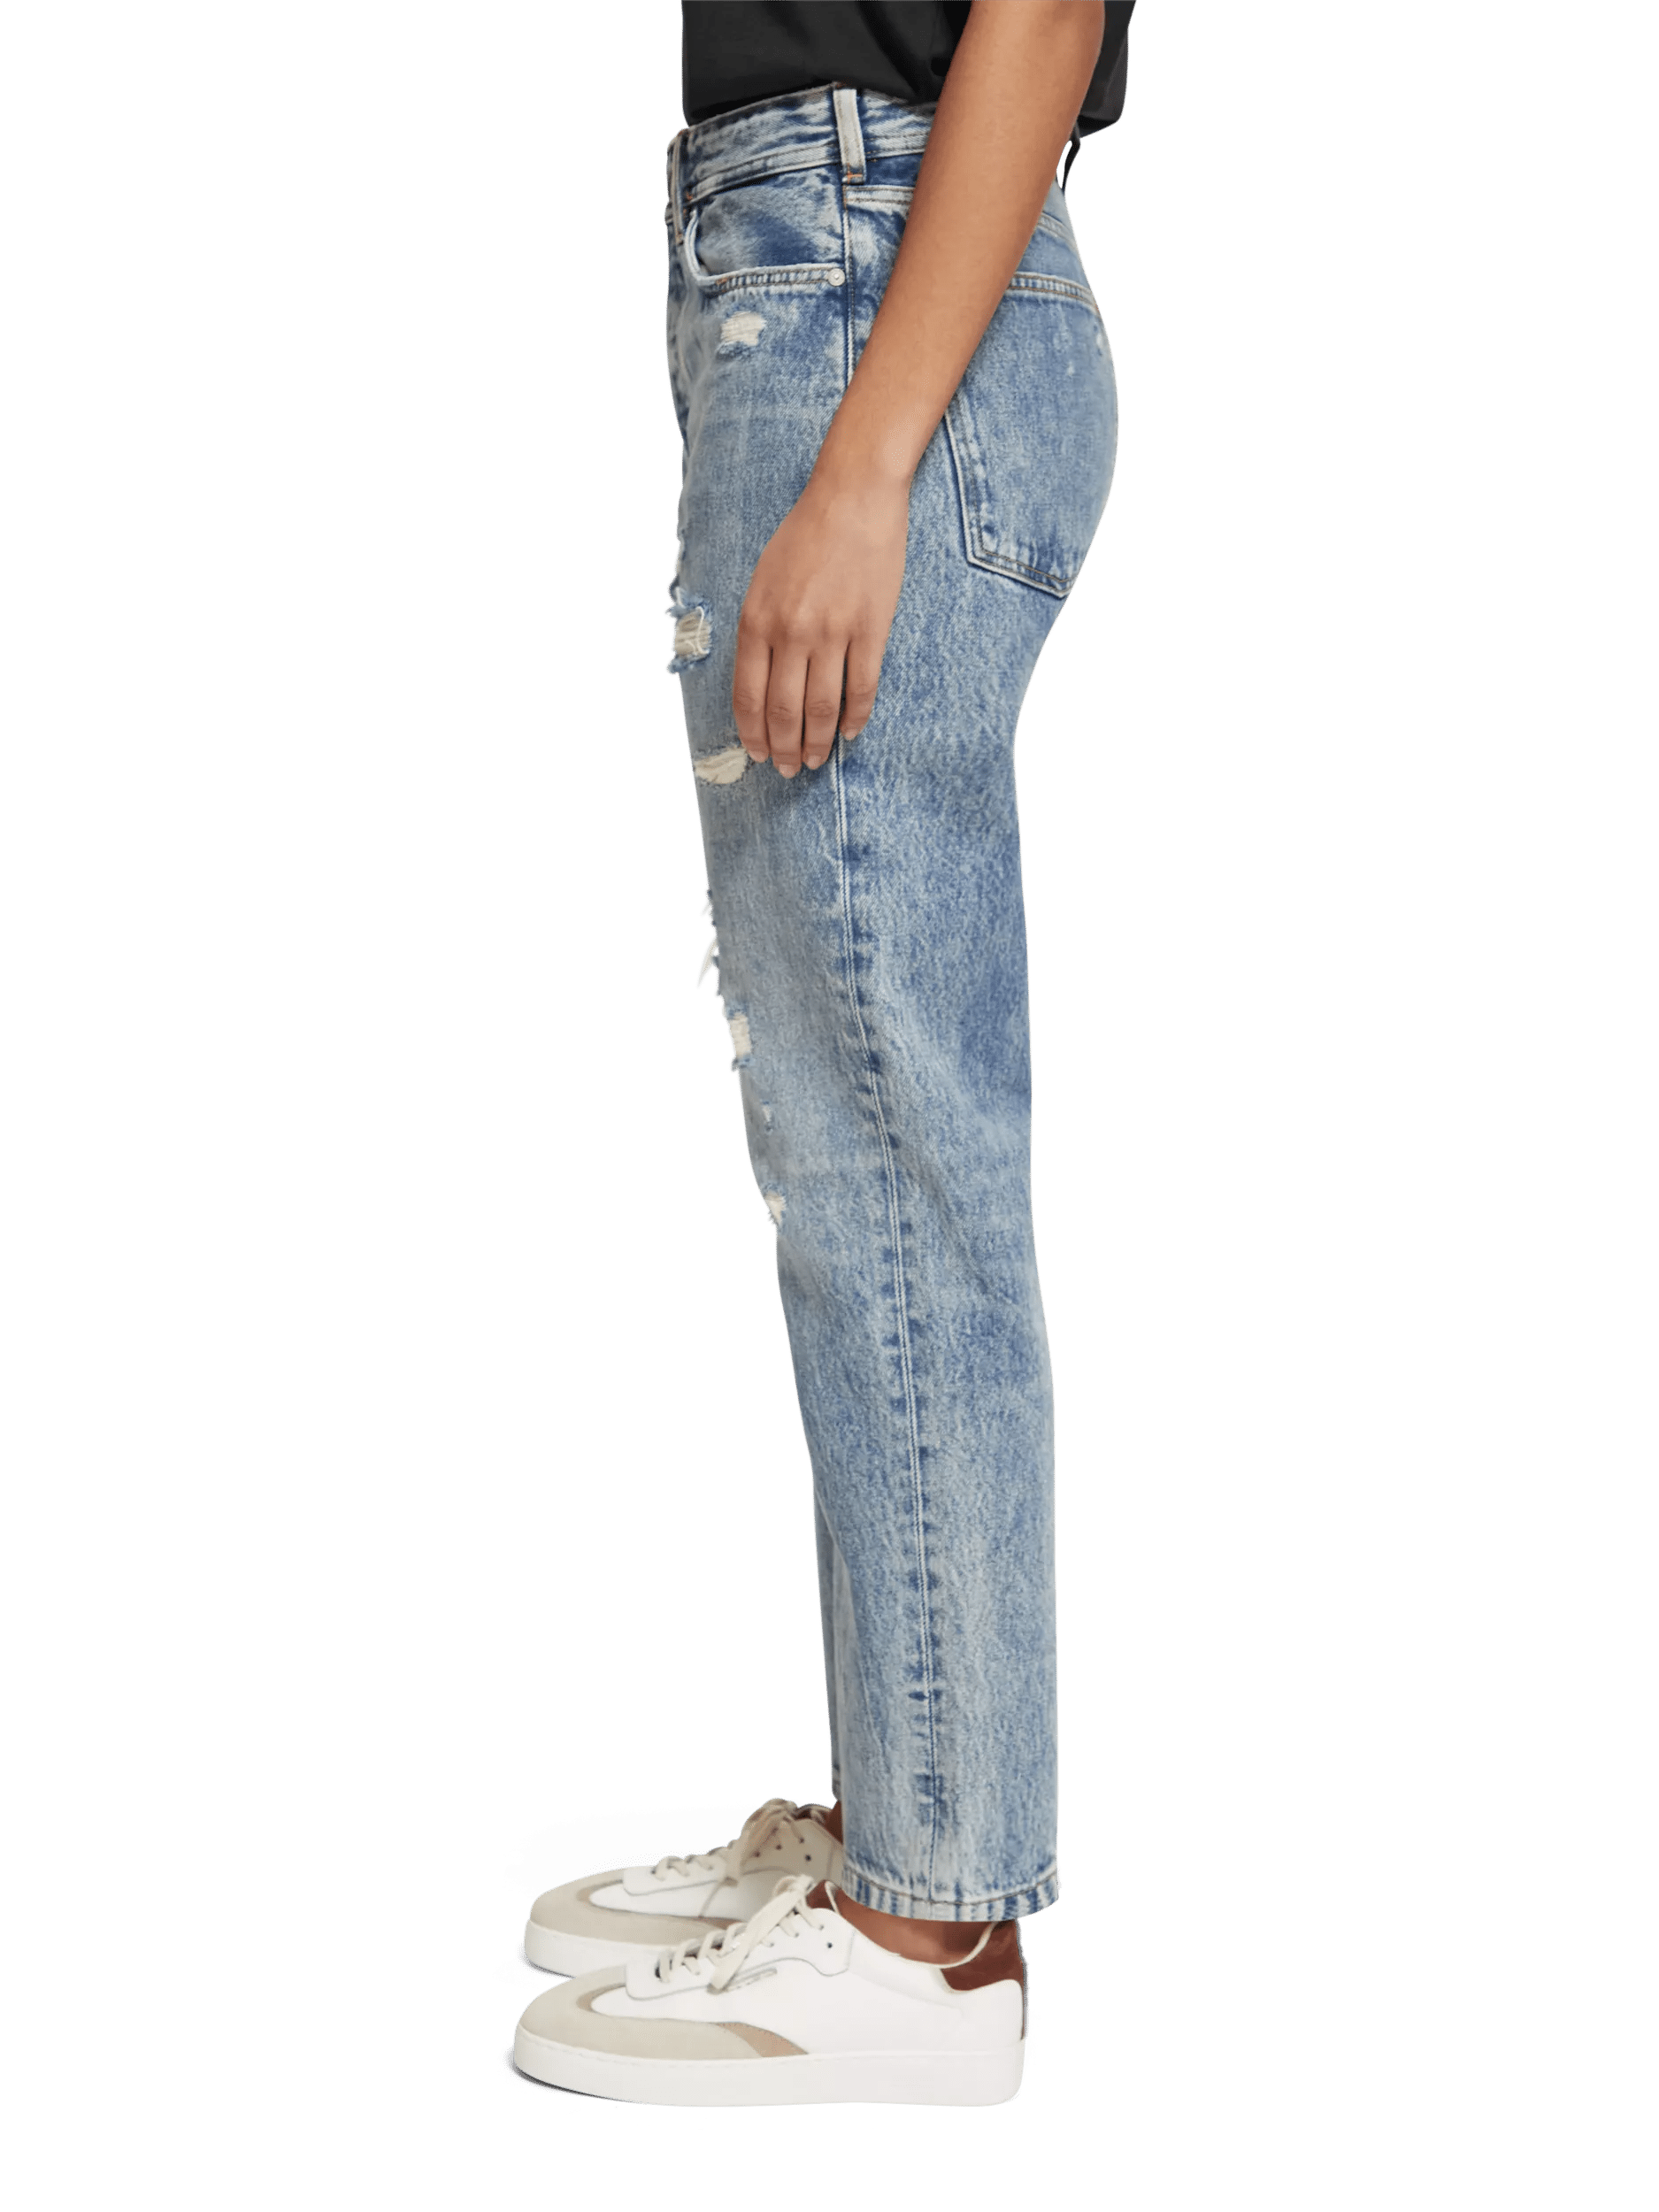 Scotch & Soda The Buzz mid-rise boyfriend fit jeans FIT-SDE